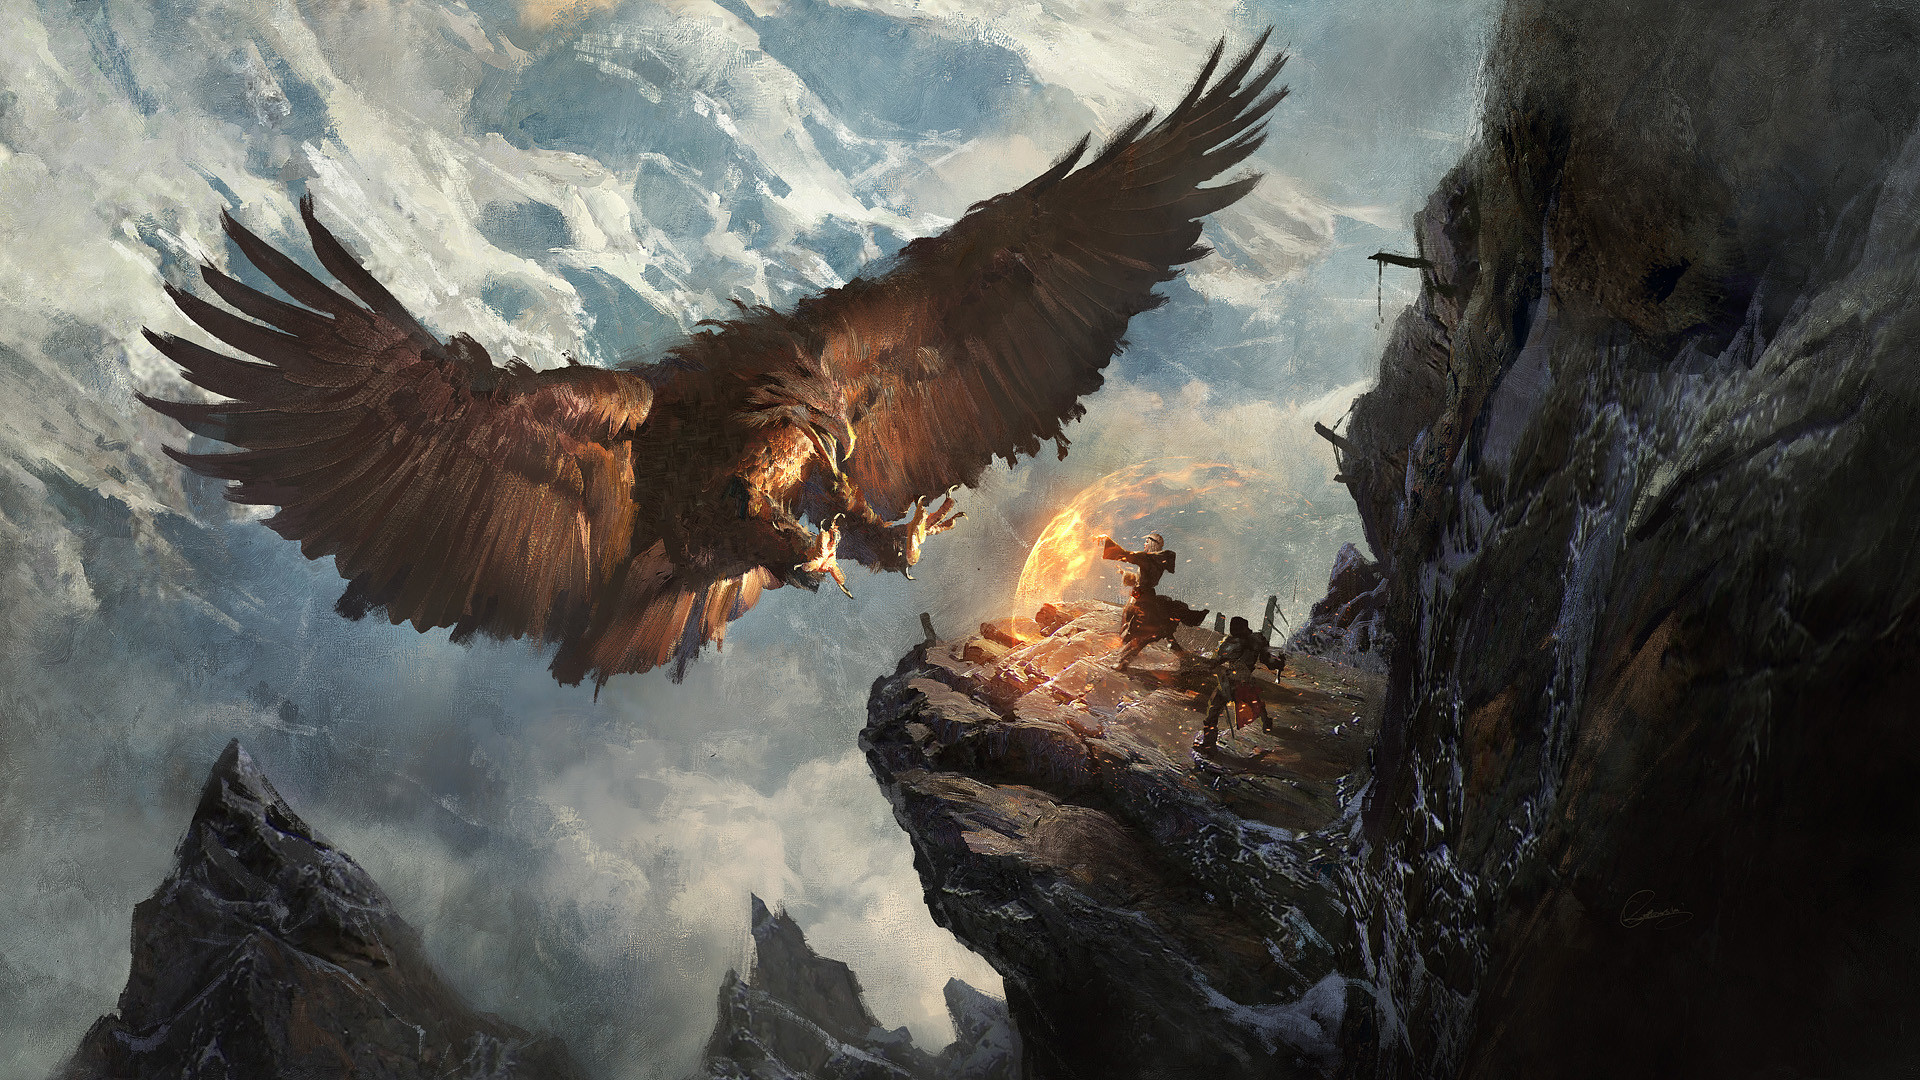 inspiration hebdo digital painting Rutkowski eagle fight fire mountain mage